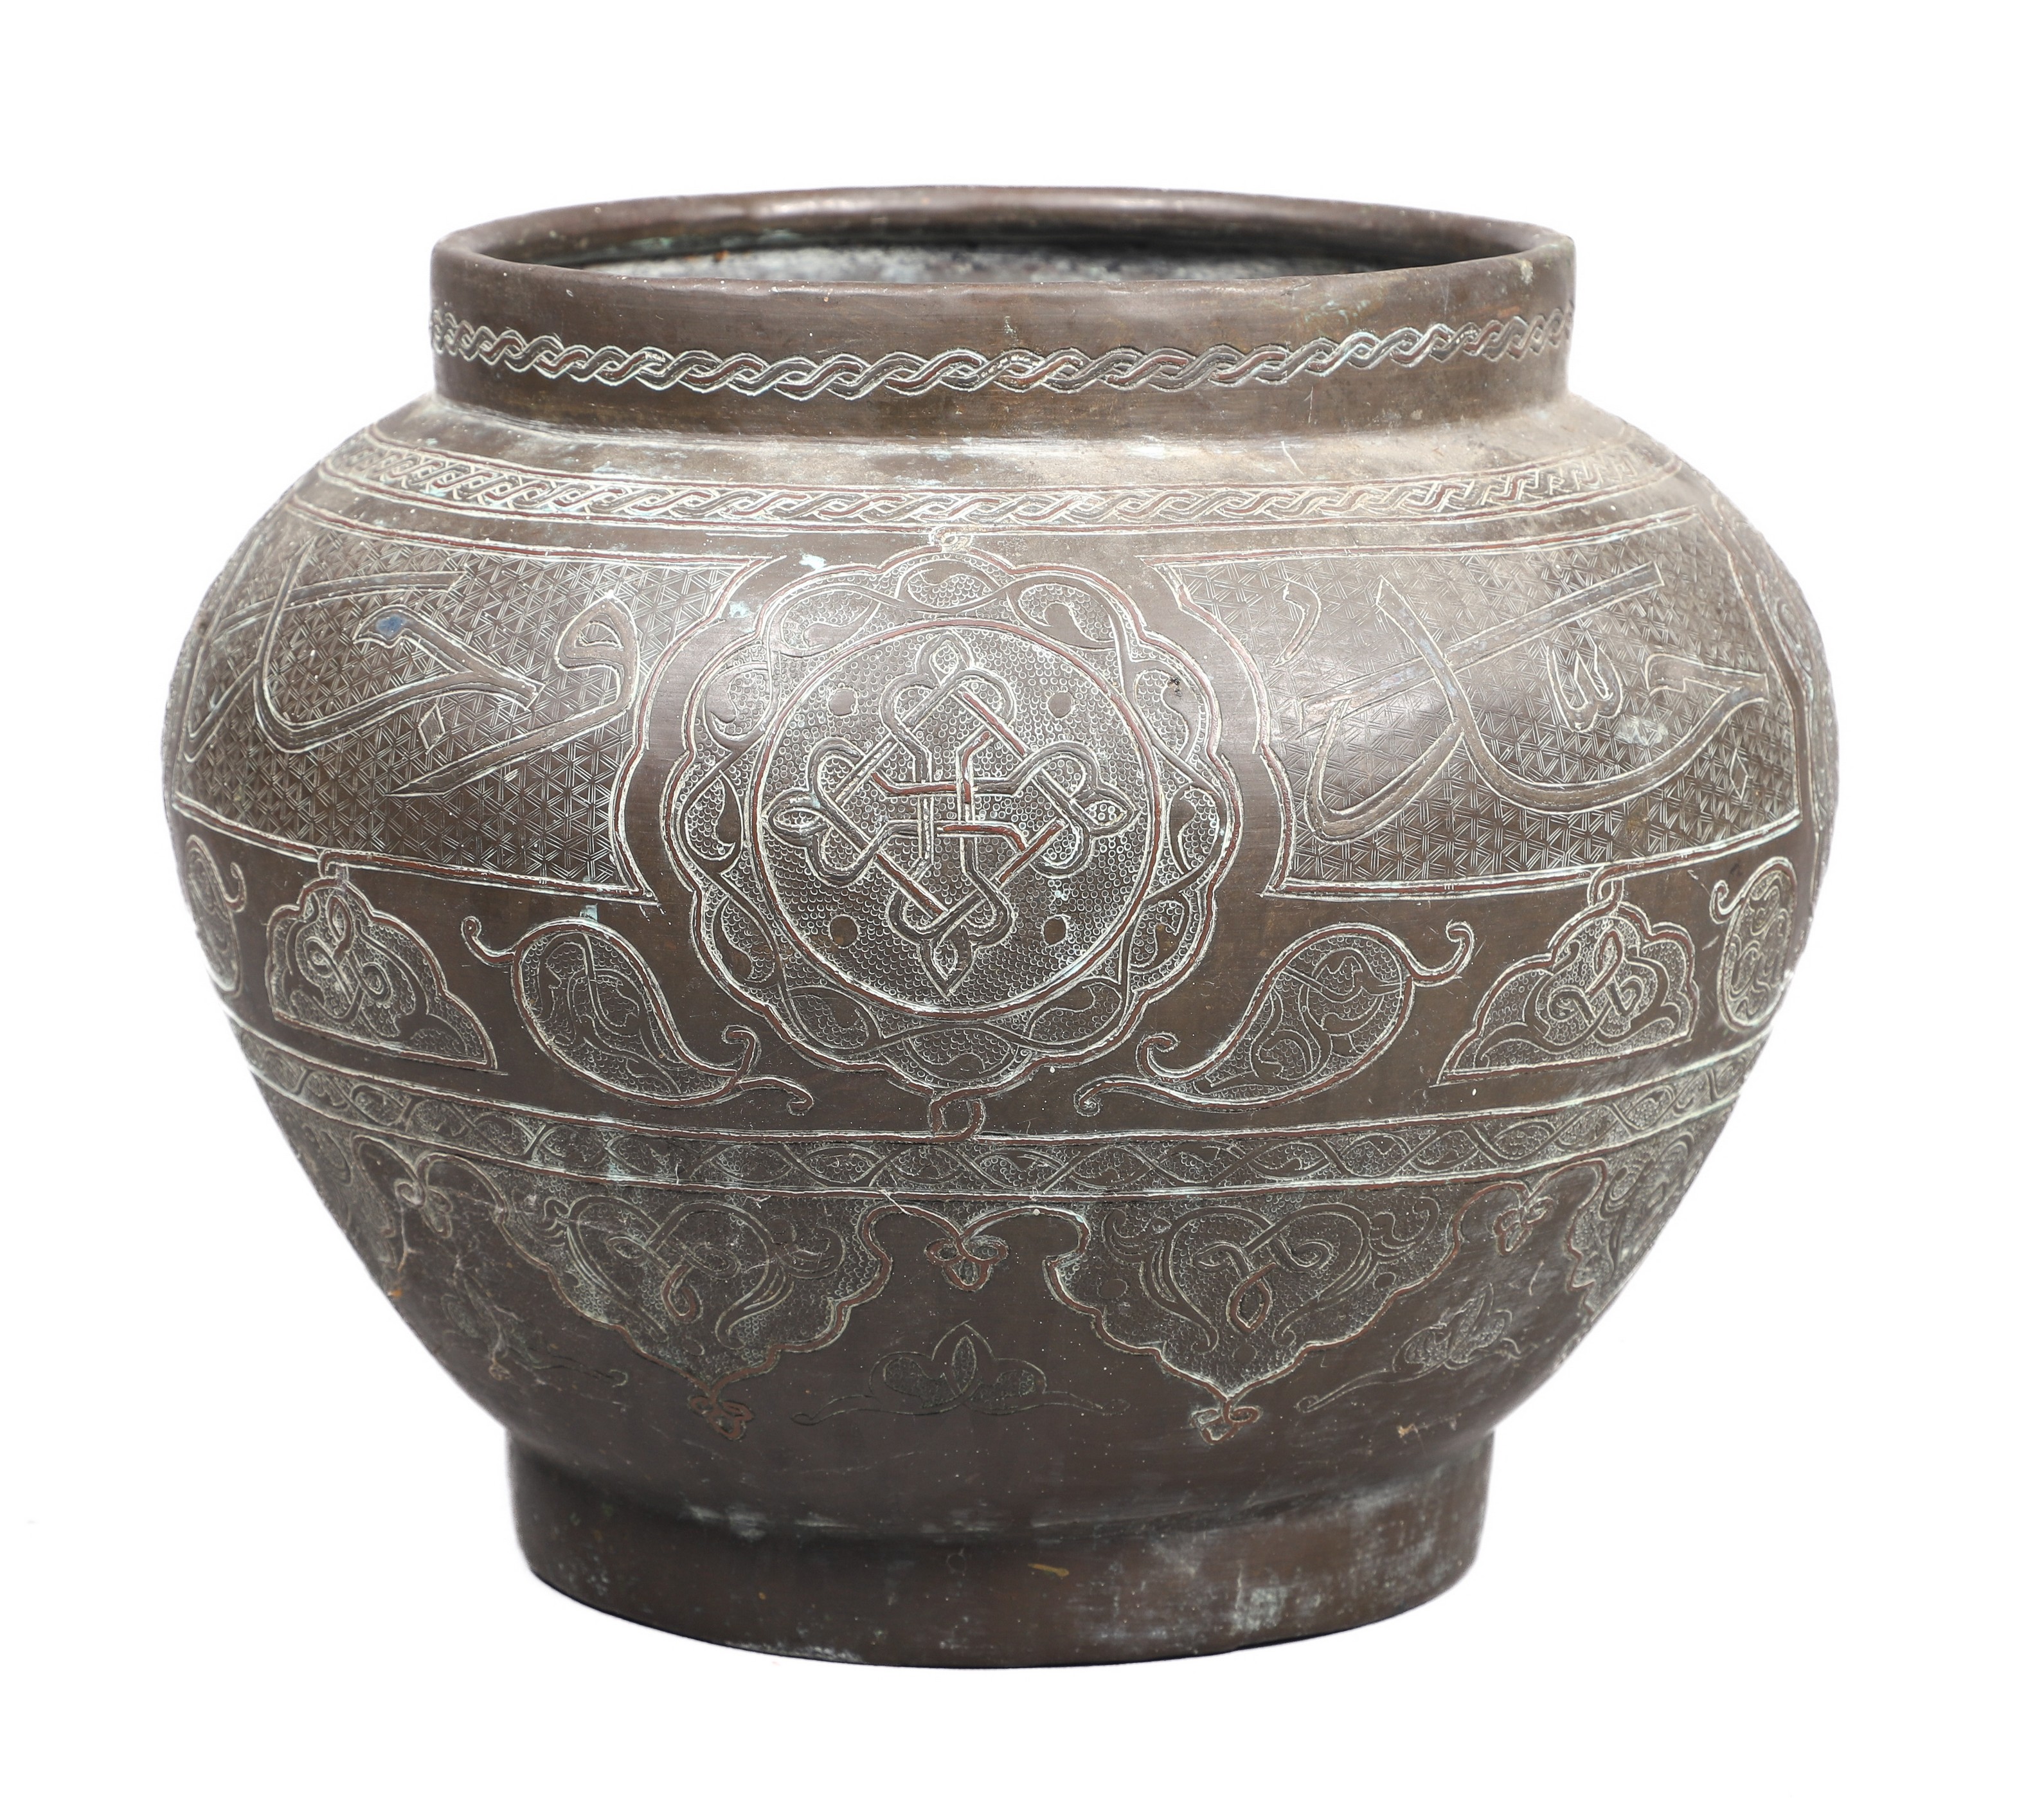 Islamic etched brass pot, Arabic